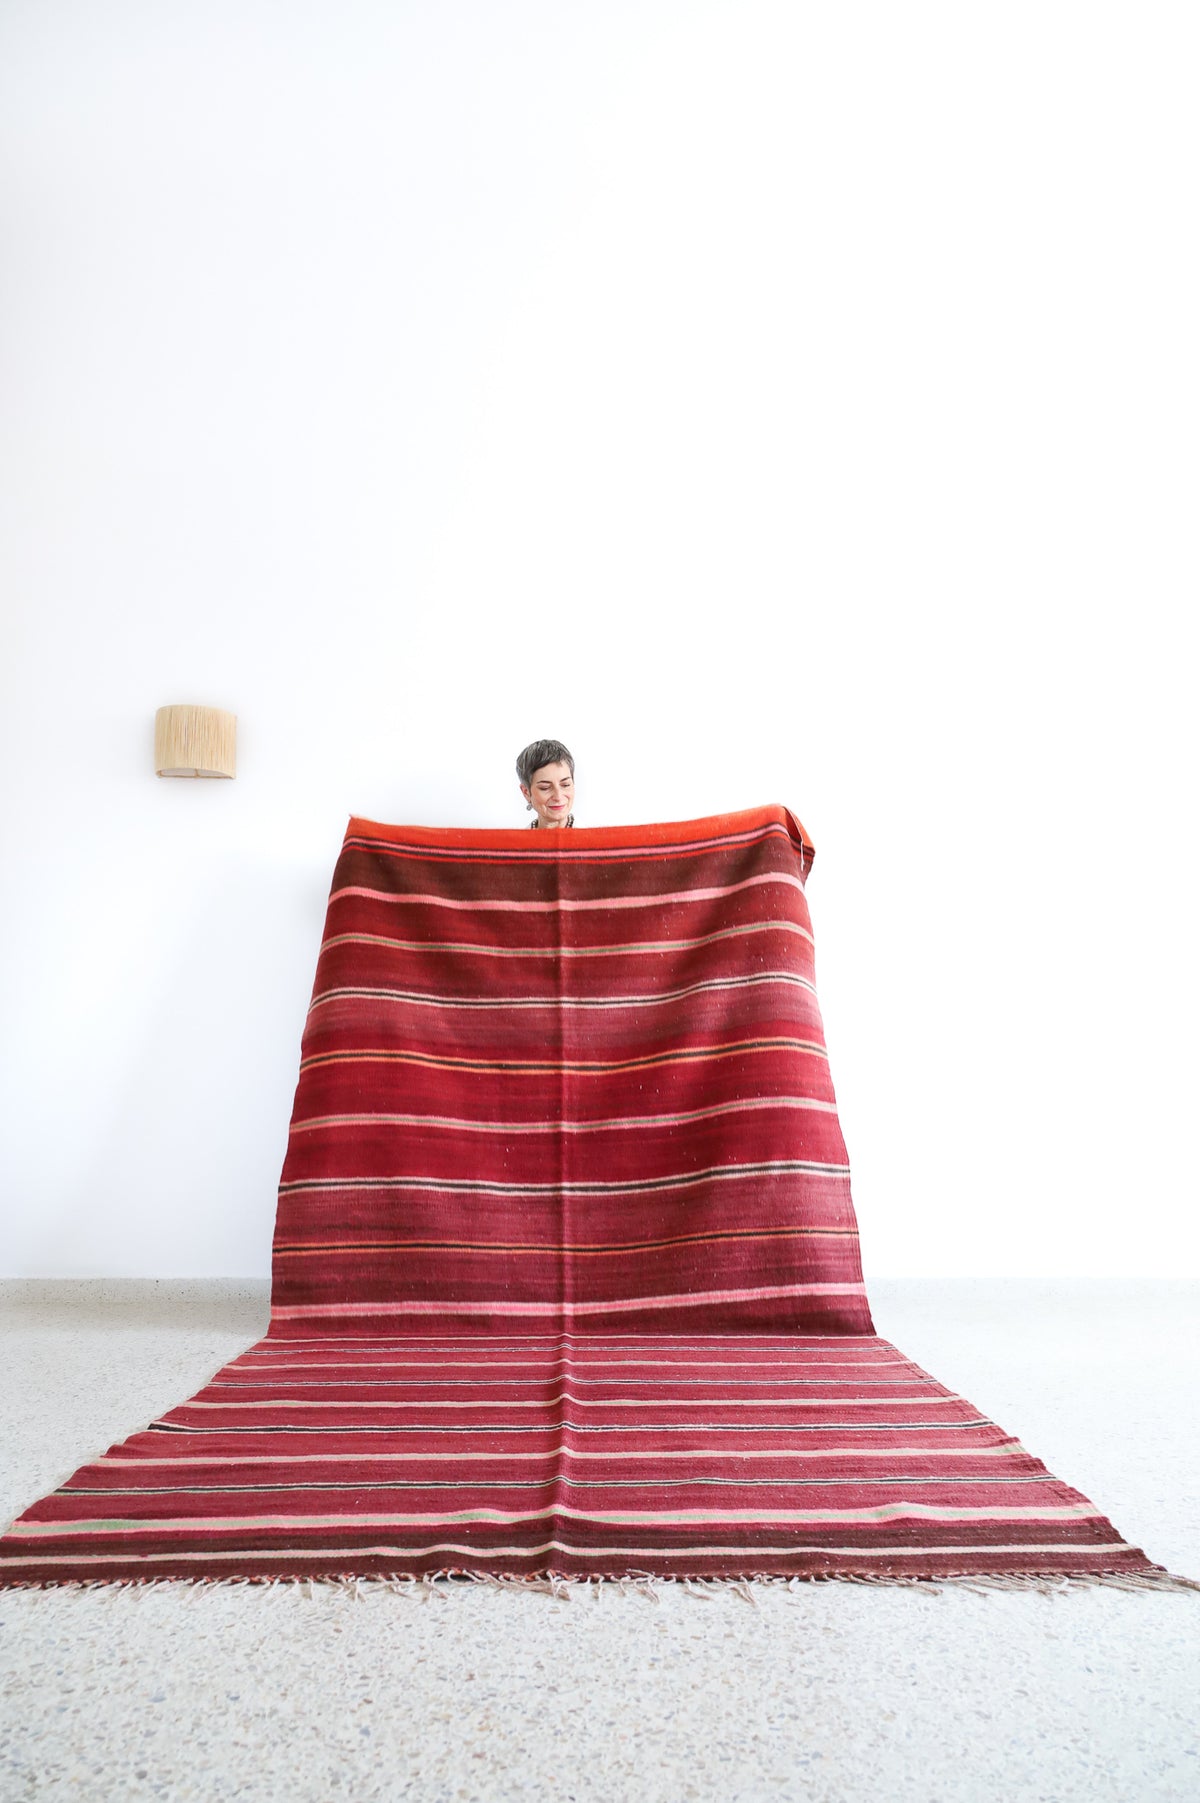 Kilim, sofa throw, 10.5 x 5 feet (322 x 152 cm)